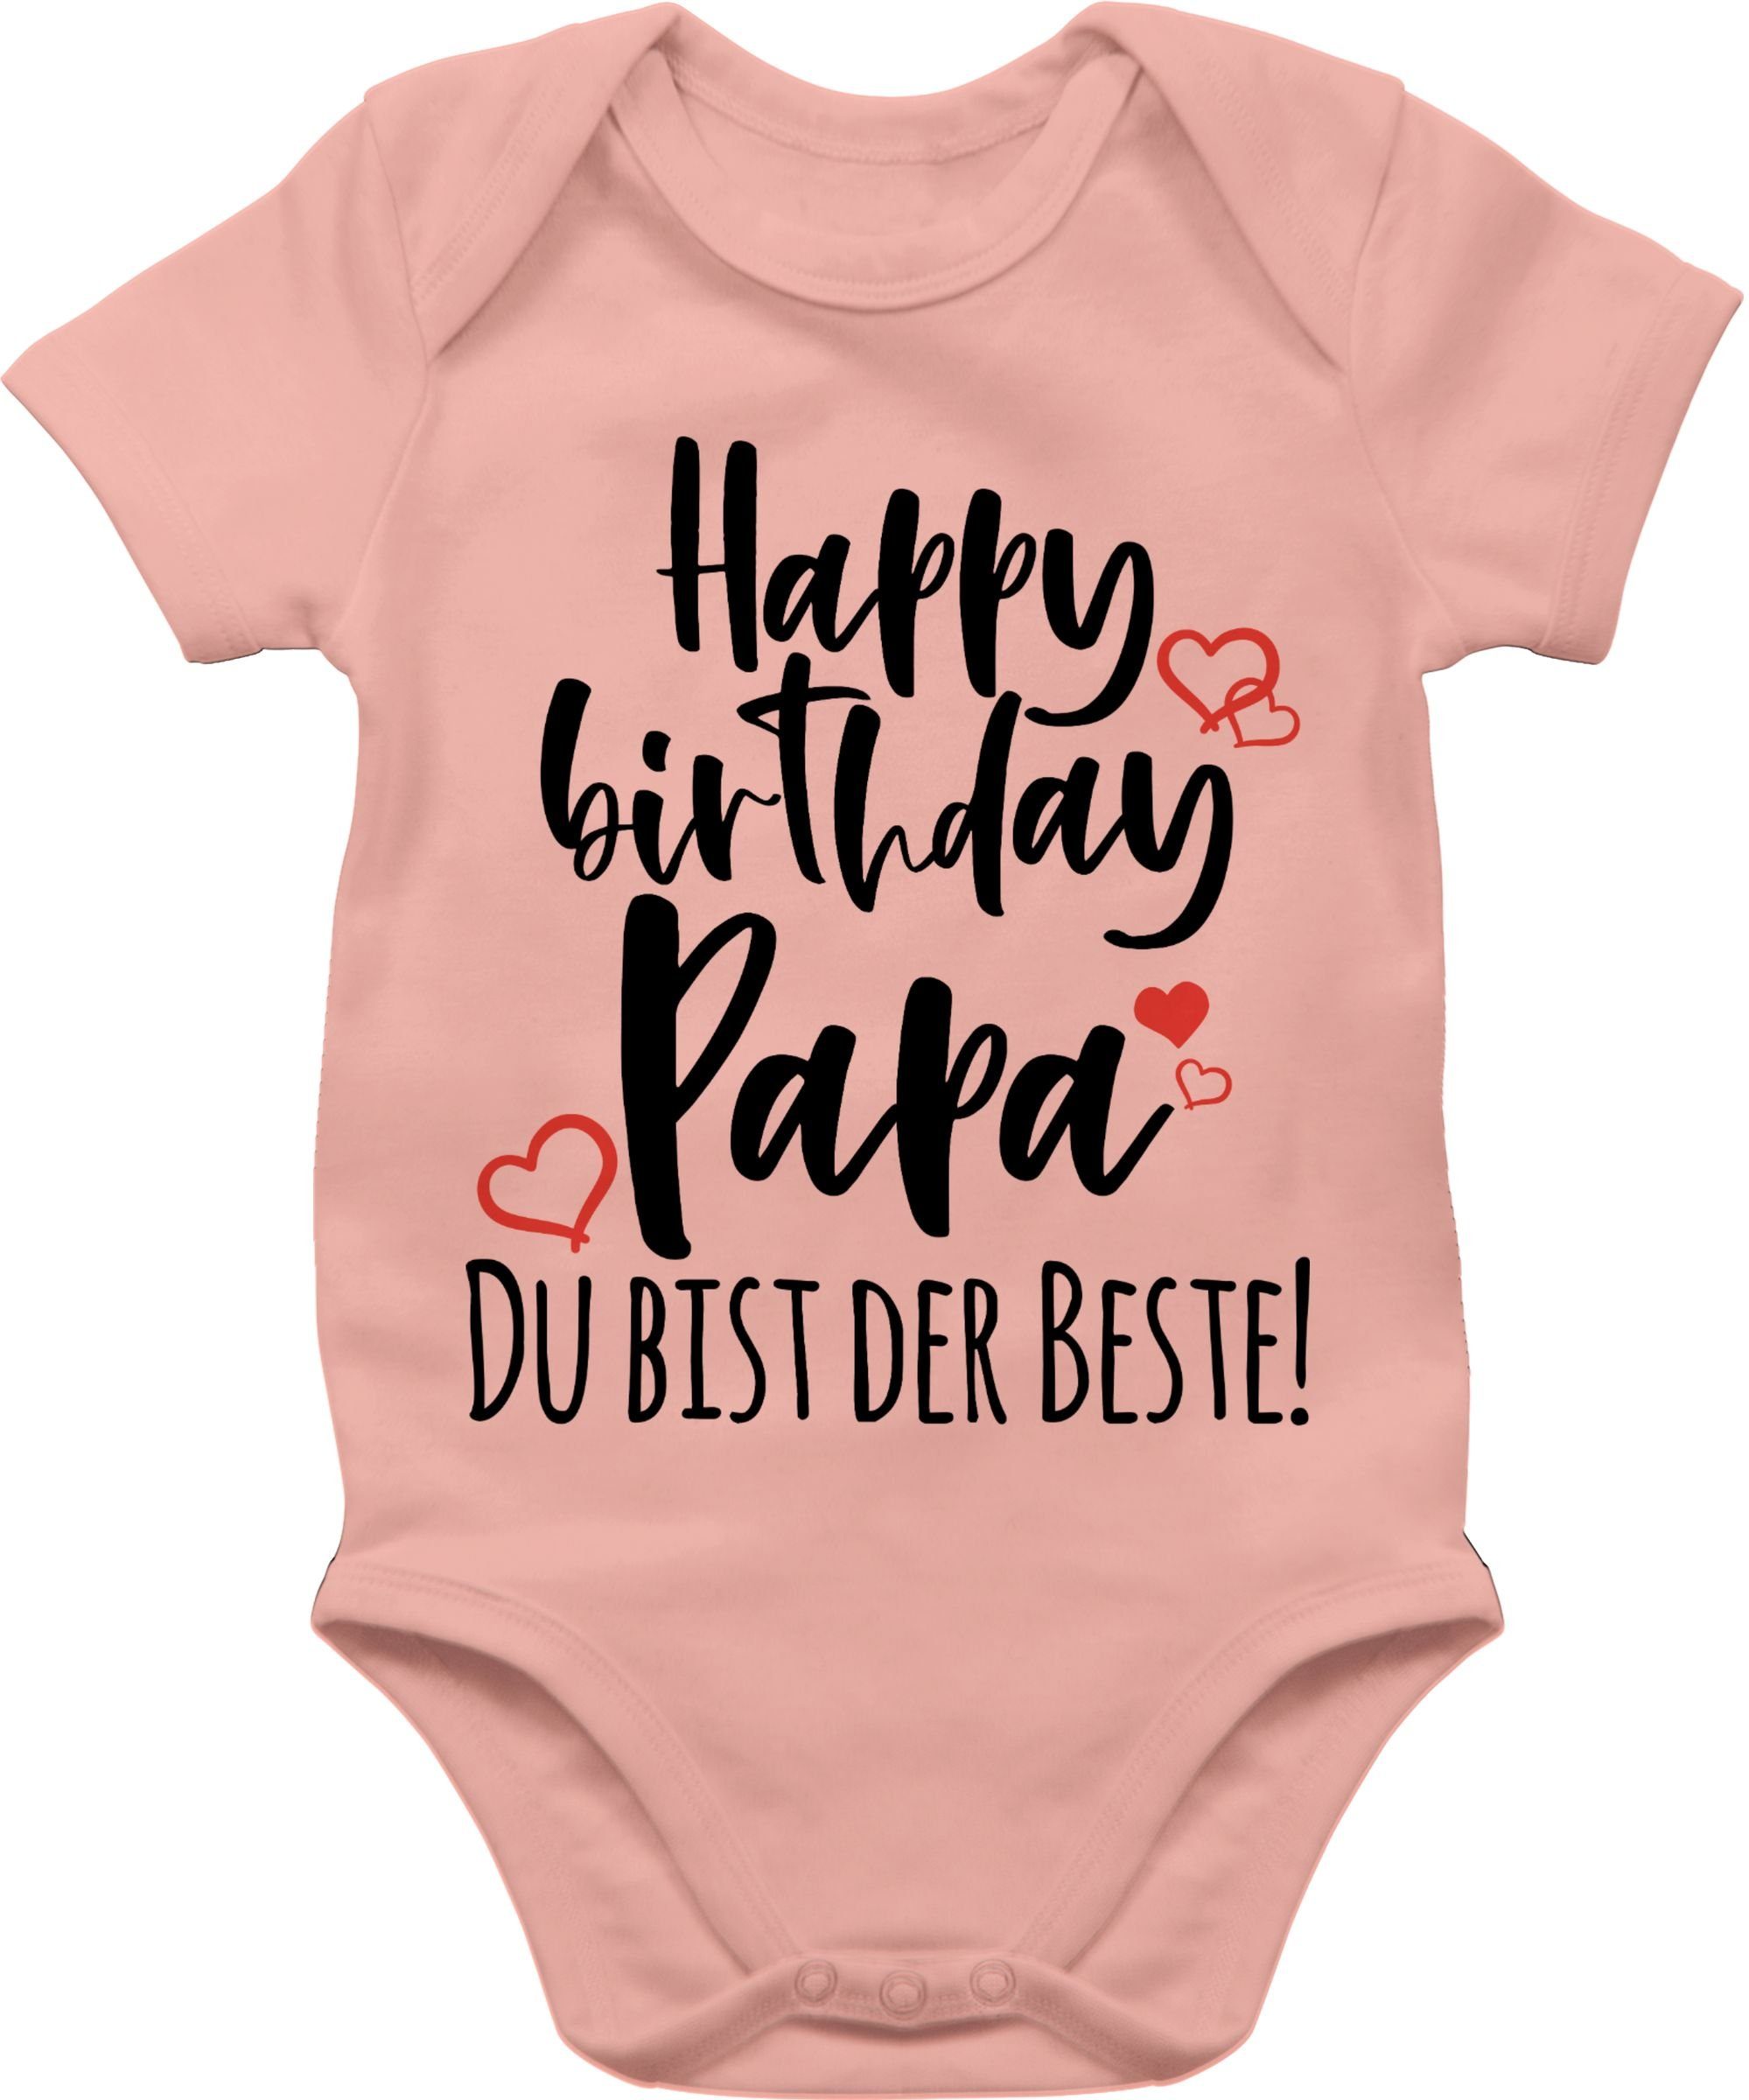 Shirtbody Papa Happy Babyrosa Strampler Mädchen 2 Baby Shirtracer & Junge Birthday